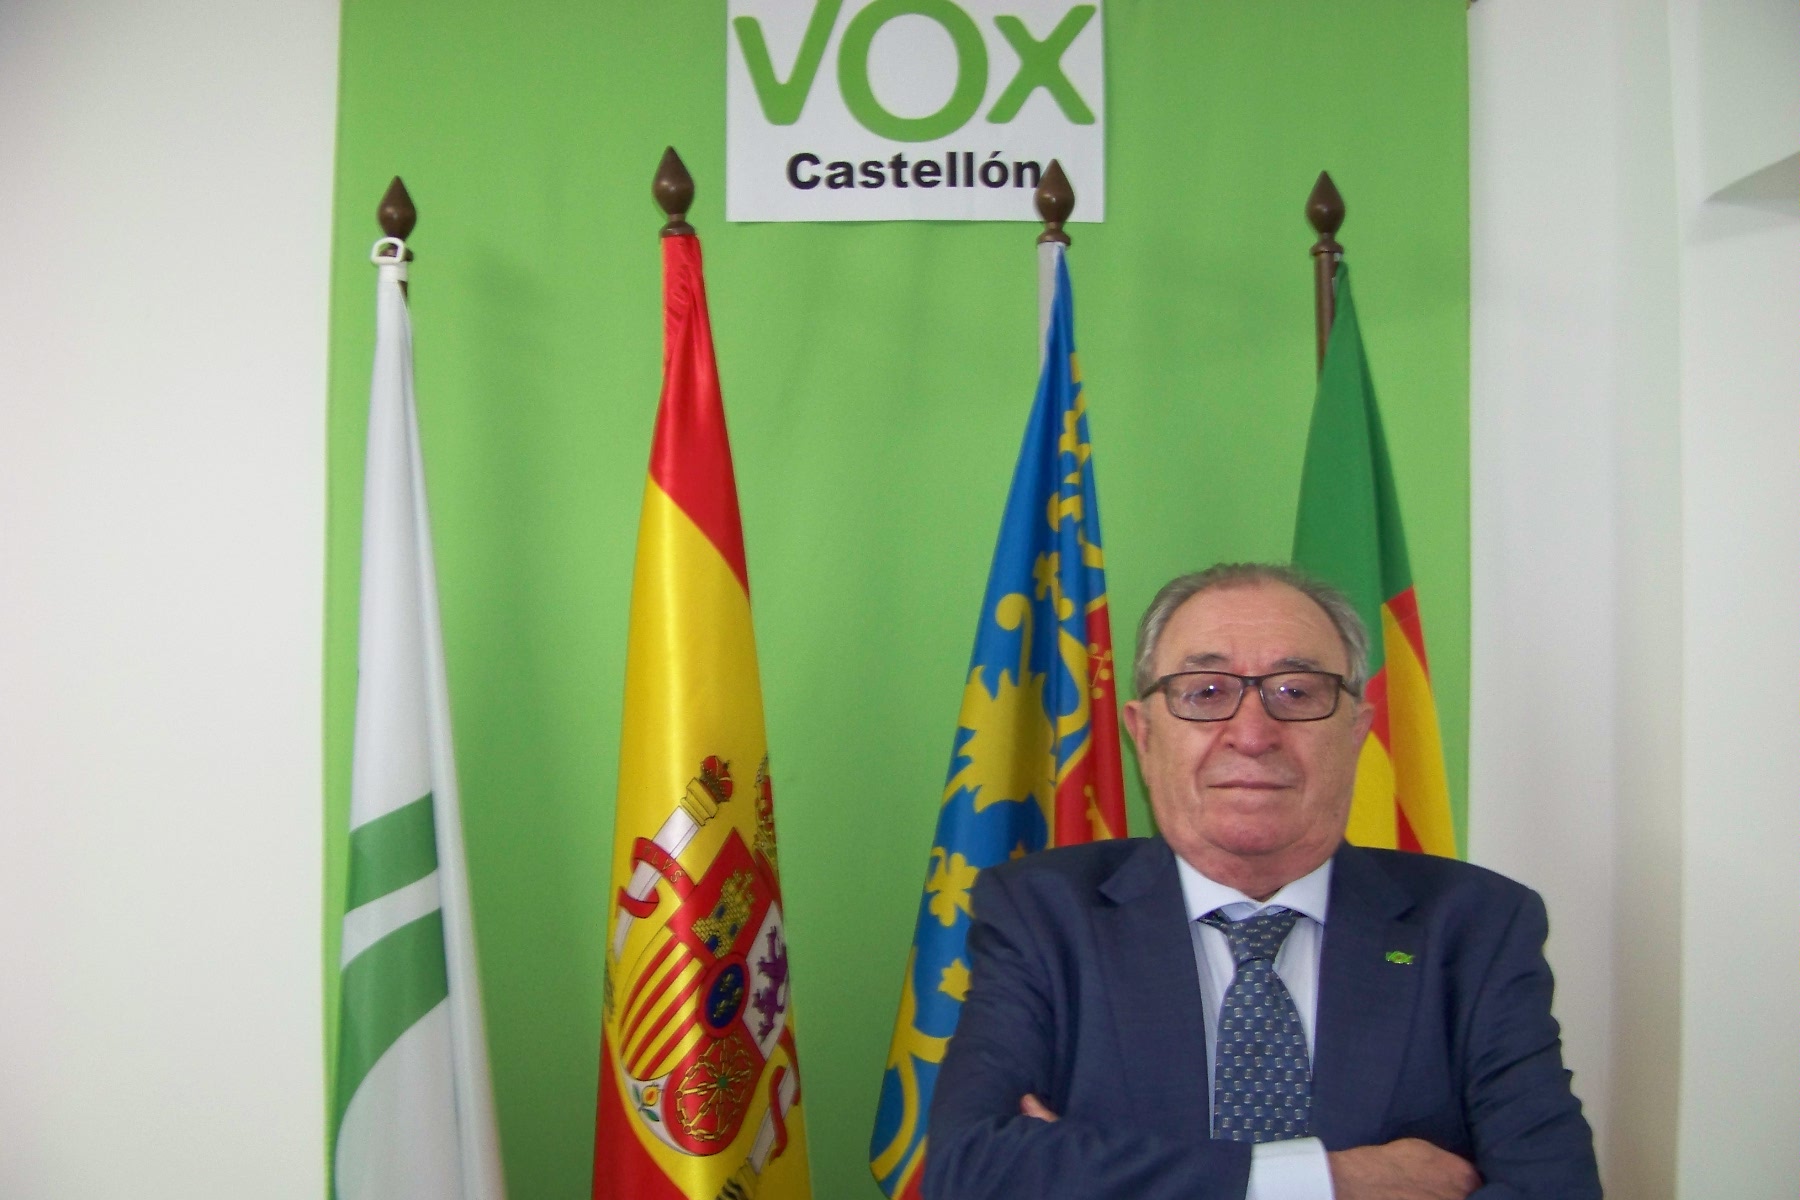 Castellón Diario entrevista a Luis Andrés Cisneros, candidato por VOX Castellón al Senado